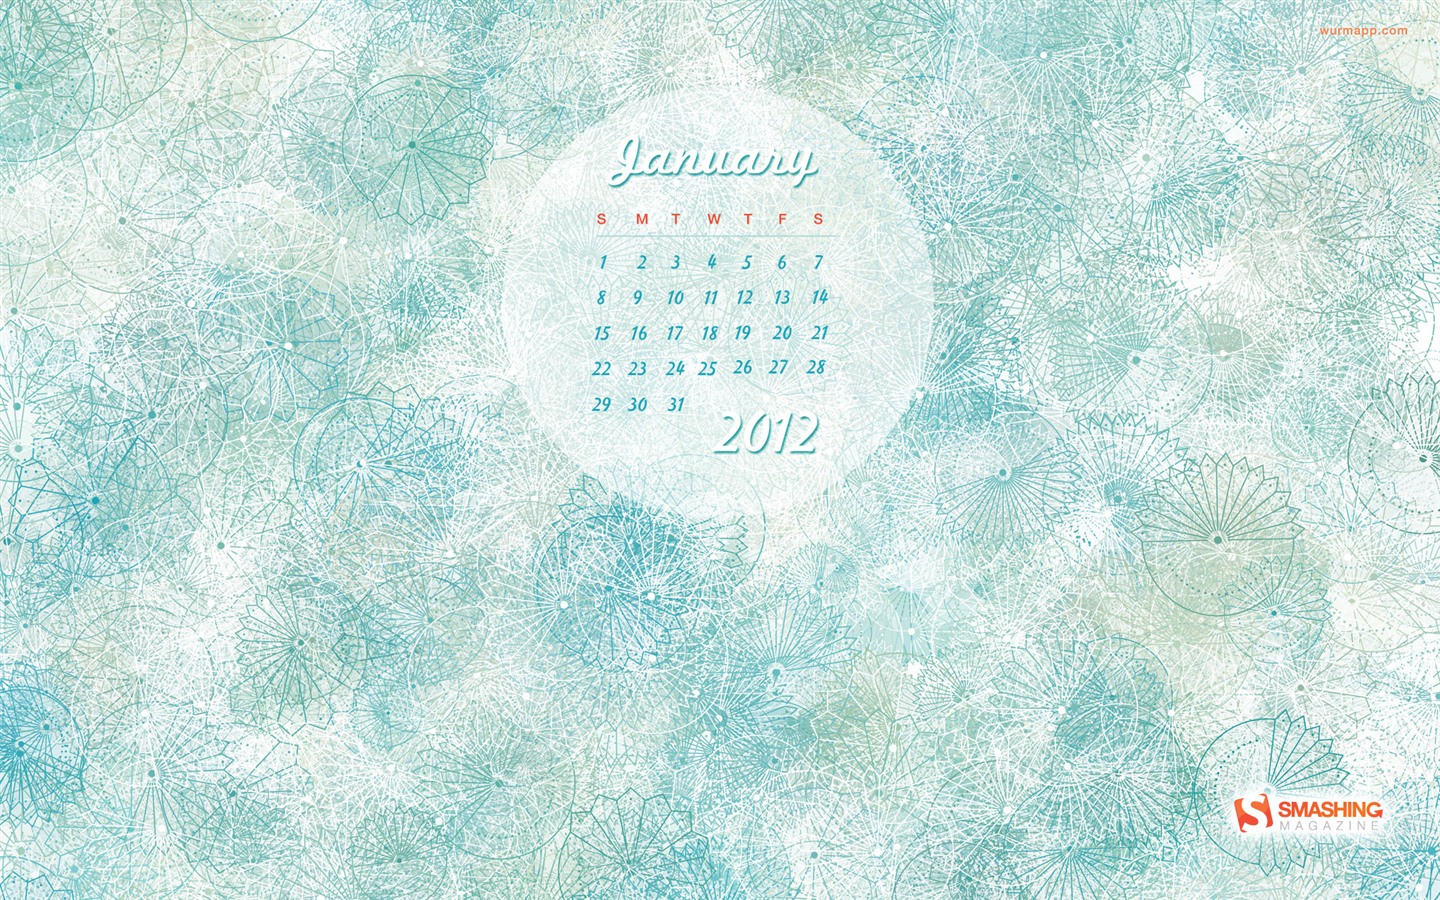 January 2012 Calendar Wallpapers #9 - 1440x900